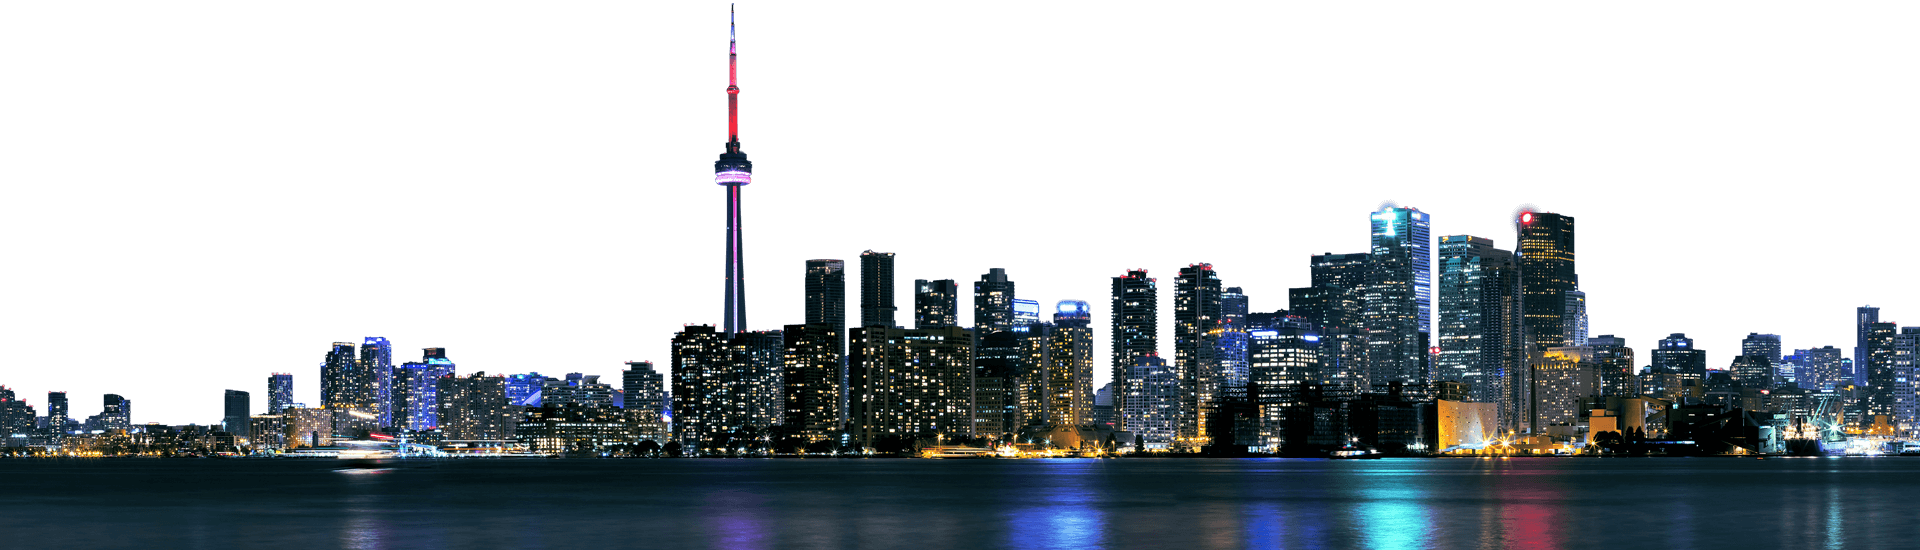 Skyline clipart large city. Toronto png image purepng